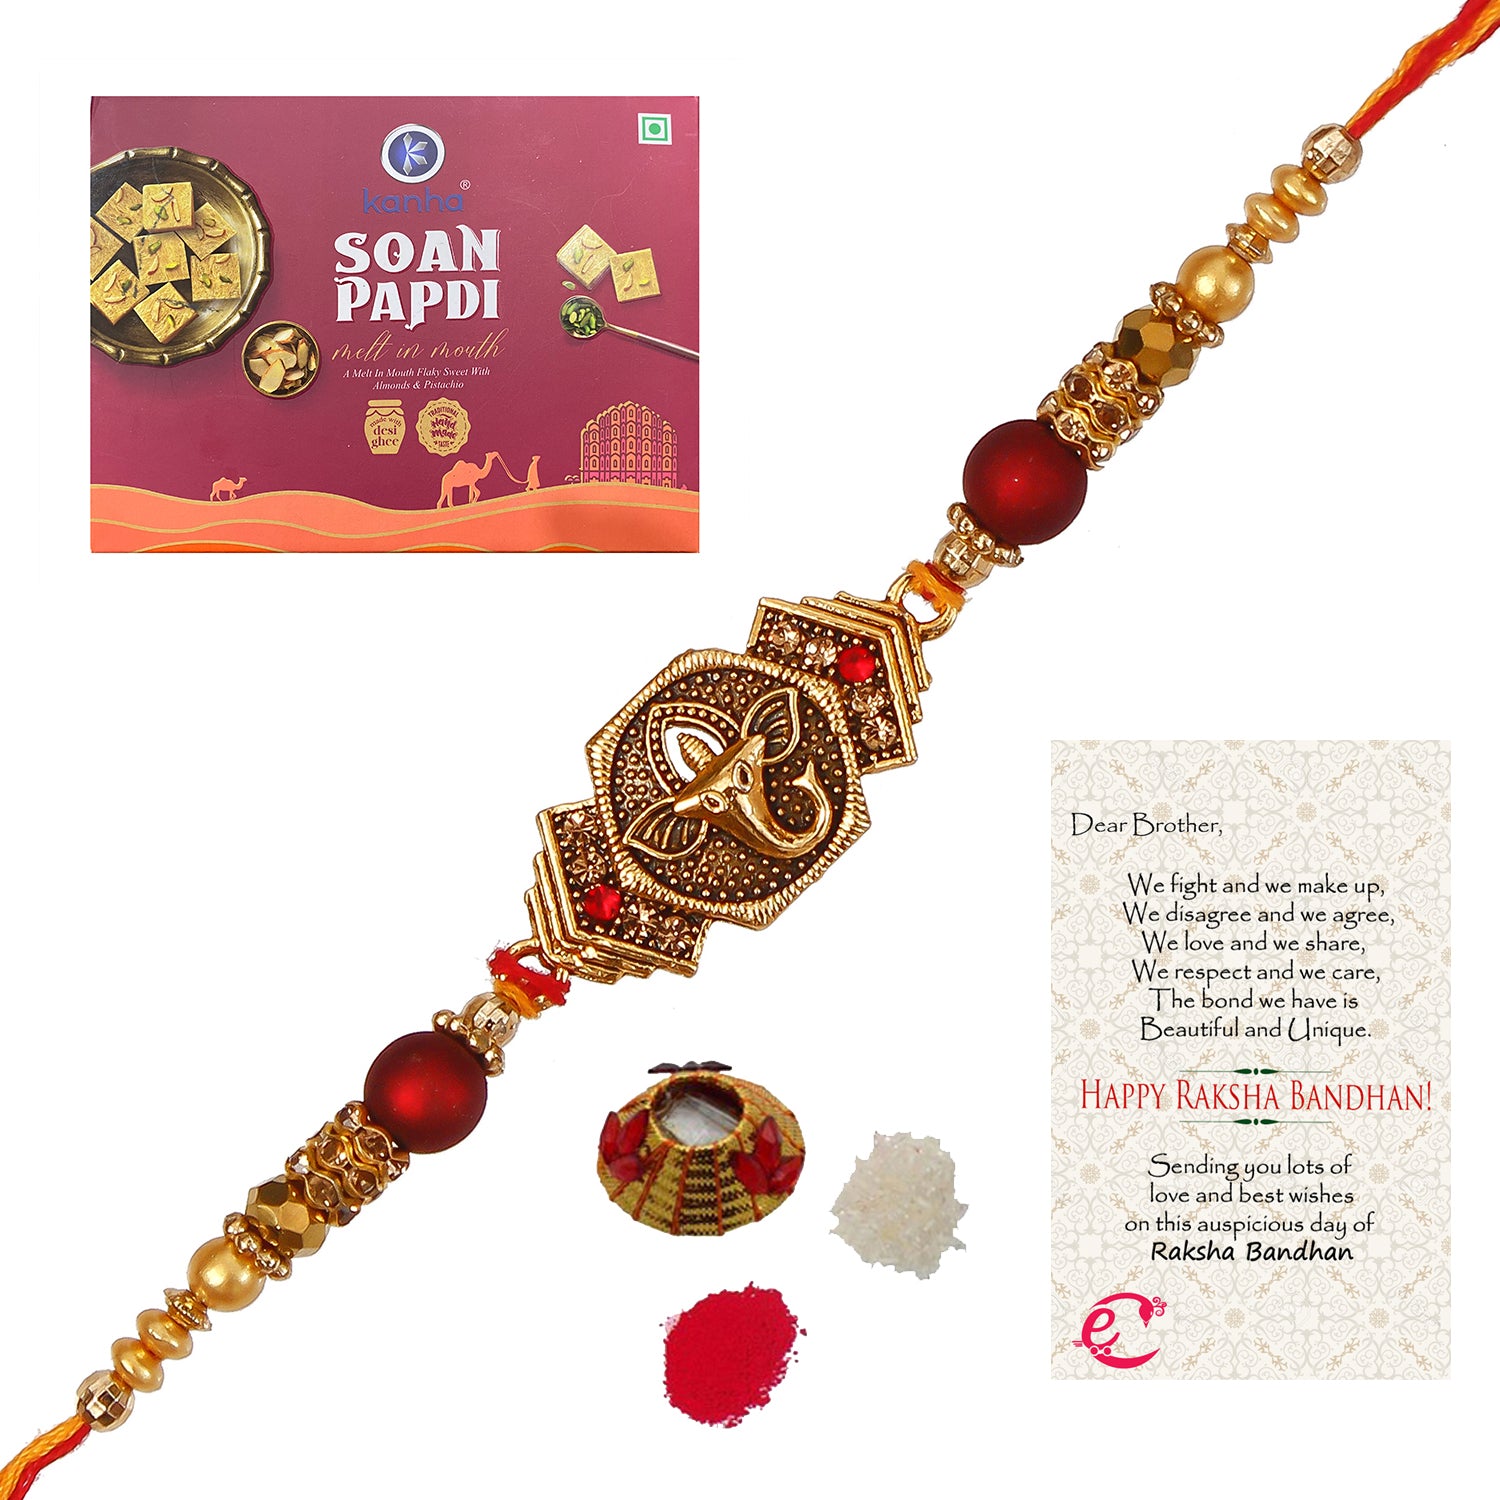 Designer Religious Ganesha Rakhi with Soan Papdi (500 Gm) and Roli Tikka Matki, Best Wishes Greeting Card